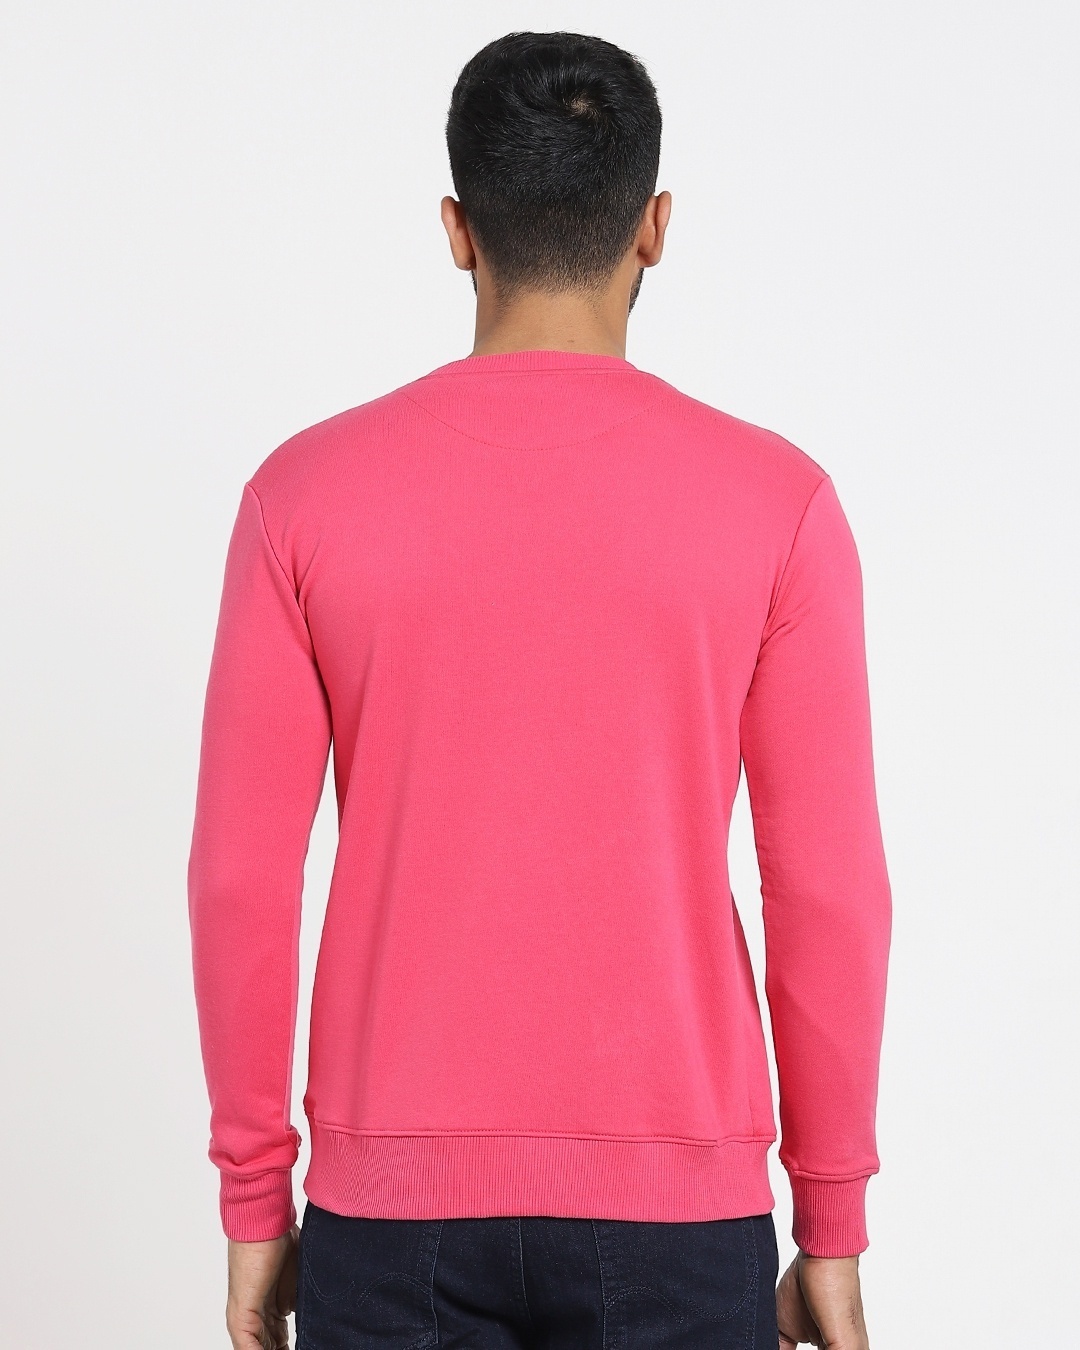 Shop Carmine Crewneck Sweatshirt-Design